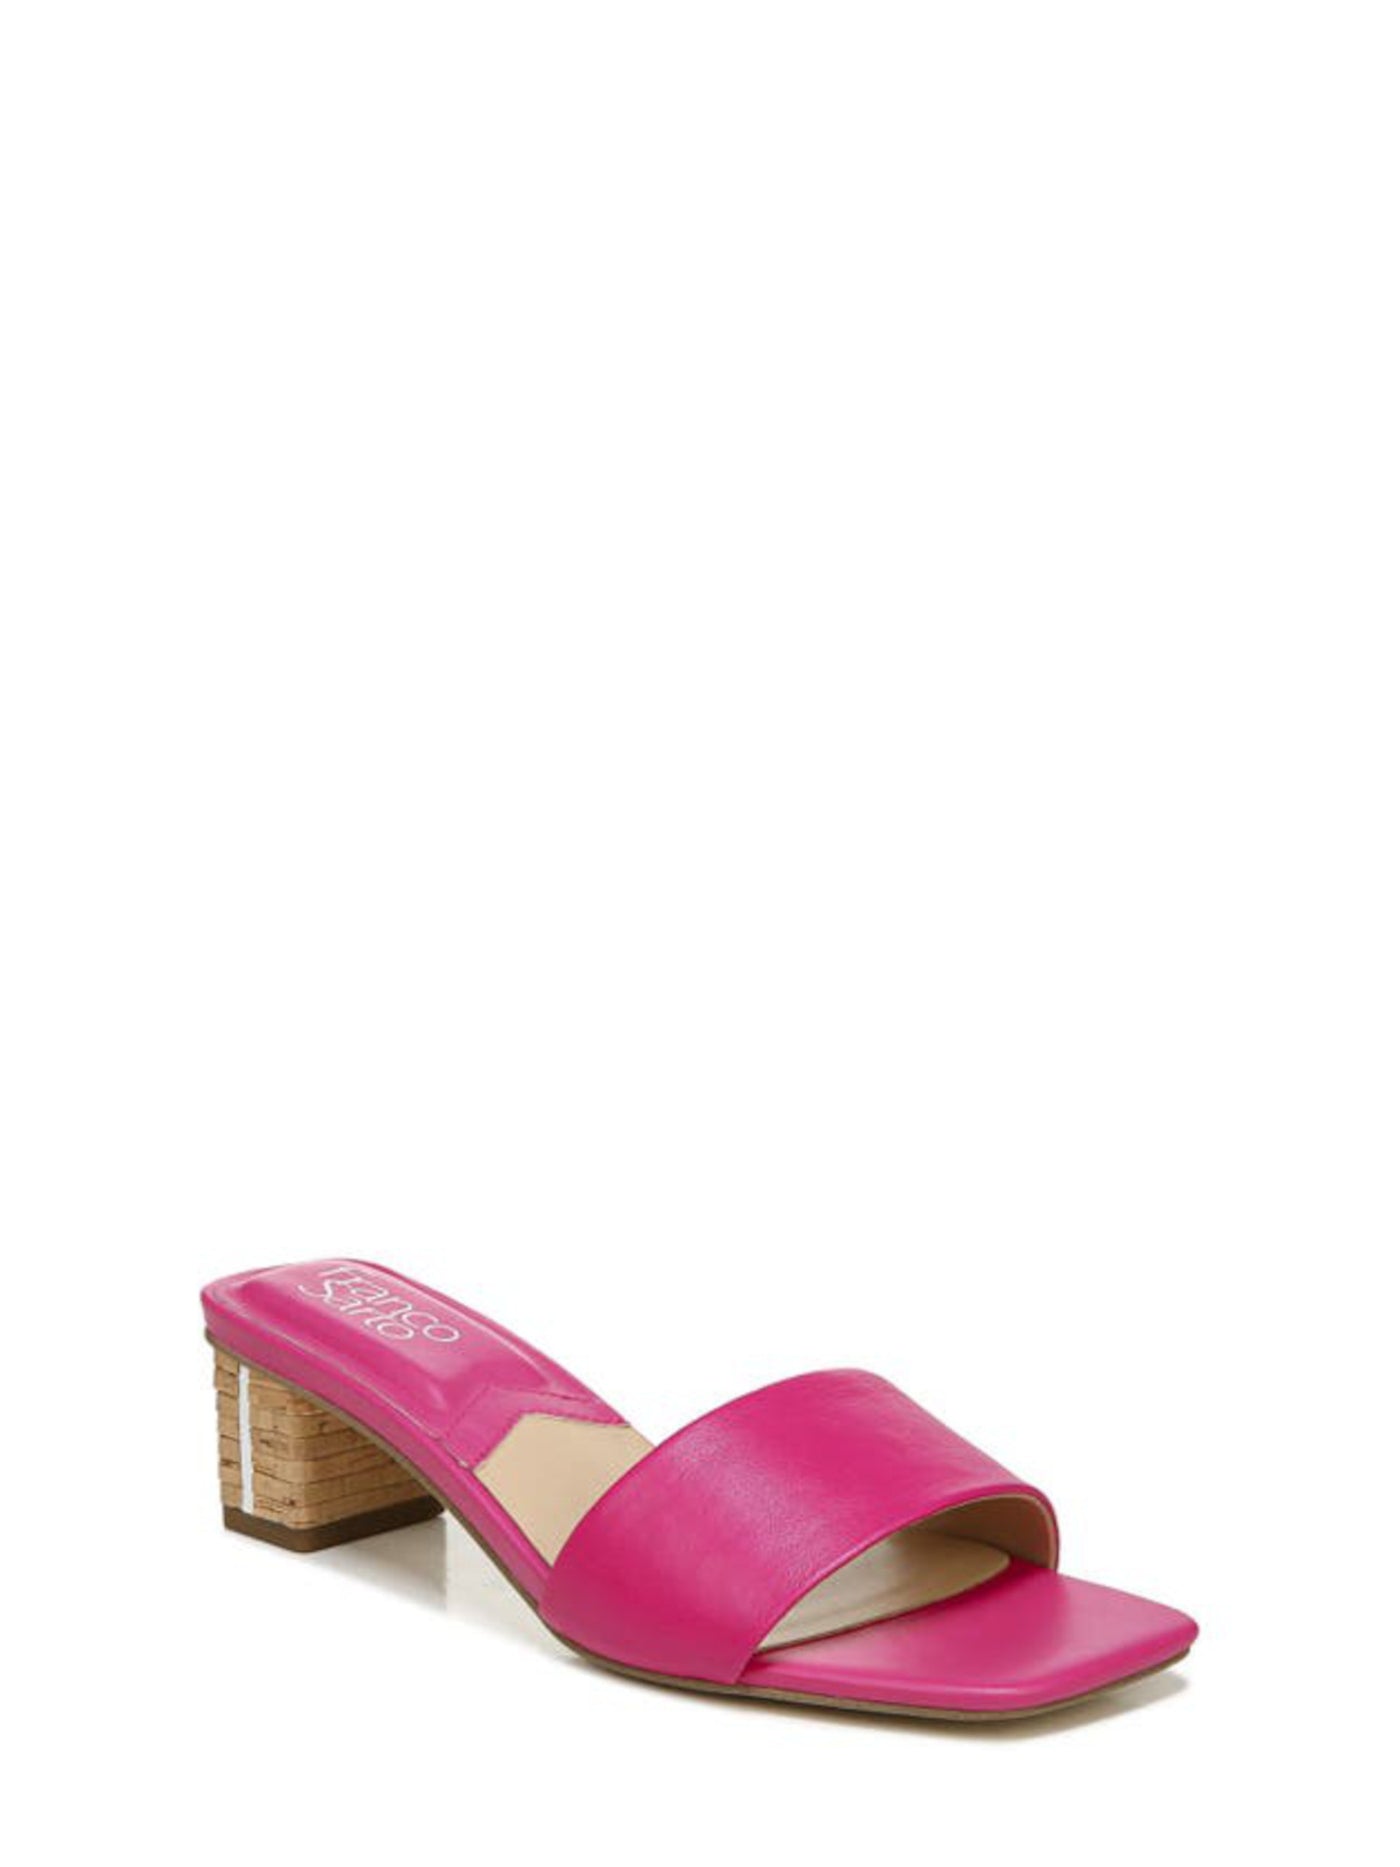 FRANCO SARTO Womens Pink Padded Cruella Open Toe Block Heel Slip On Leather Slide Sandals 10 M